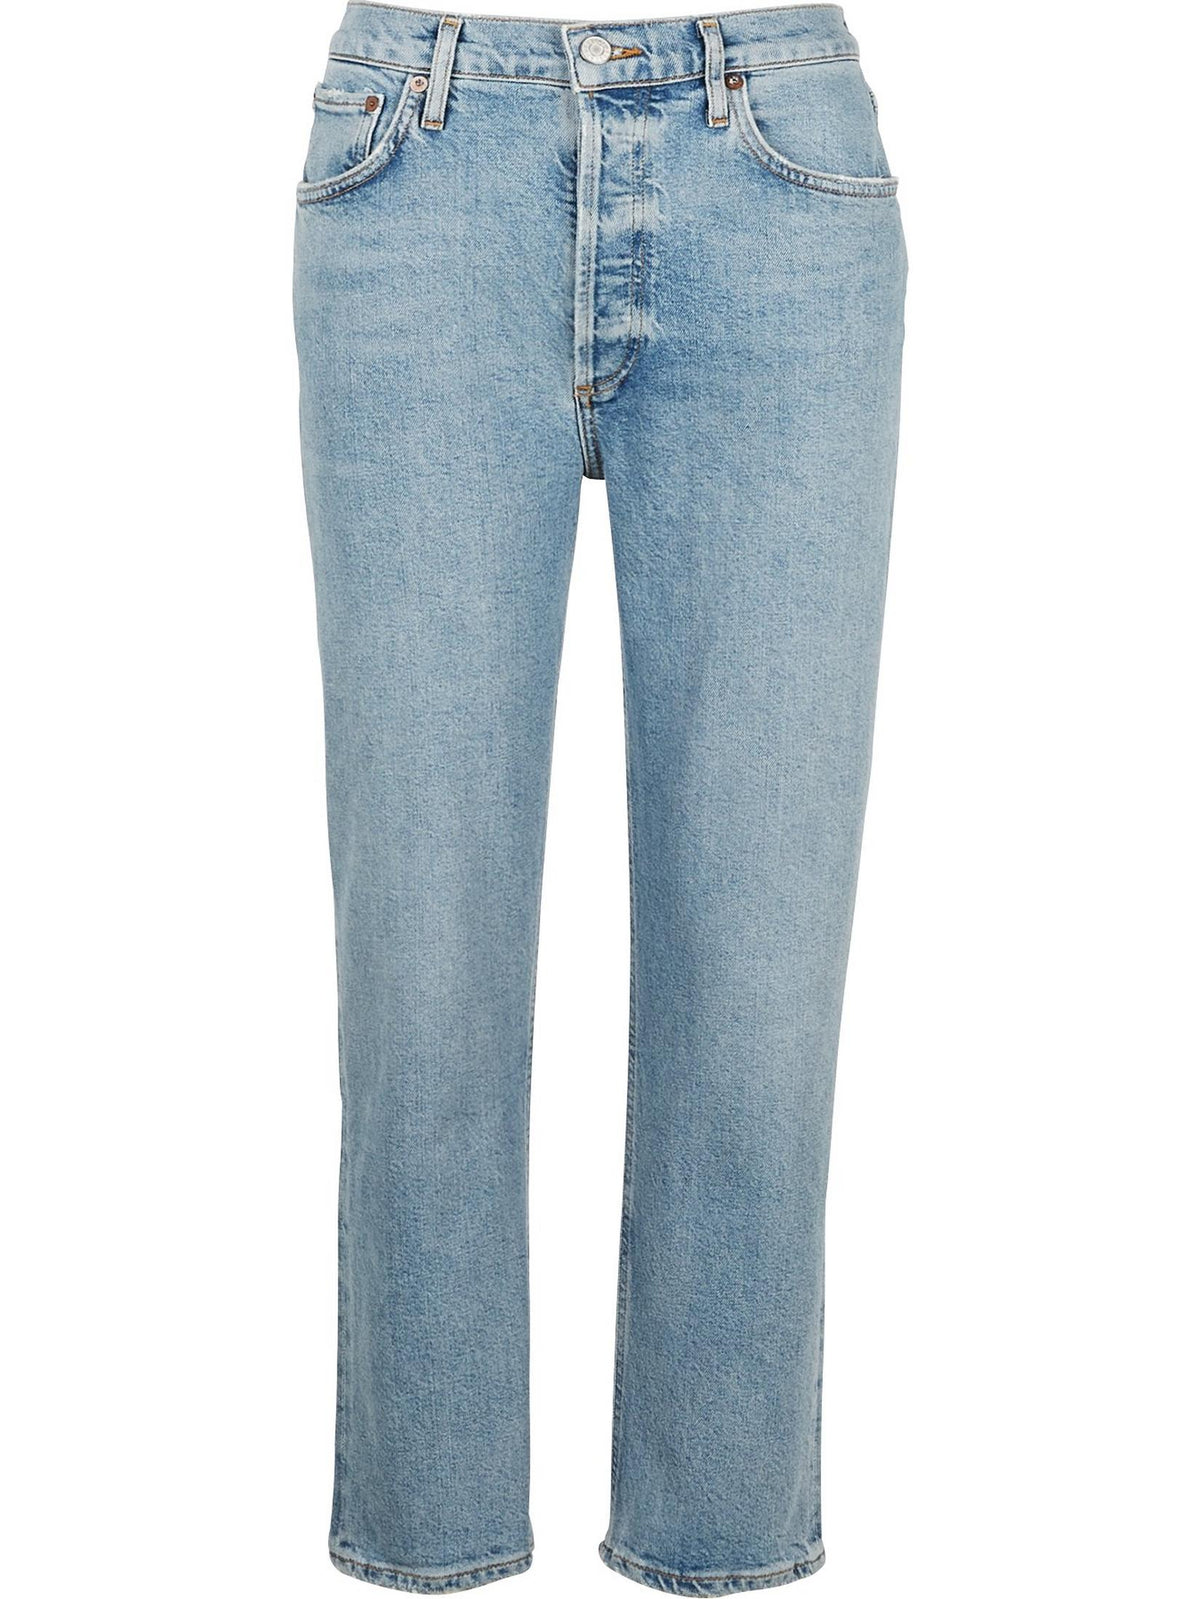 Womens Agolde Riley Crop Jeans in Denim